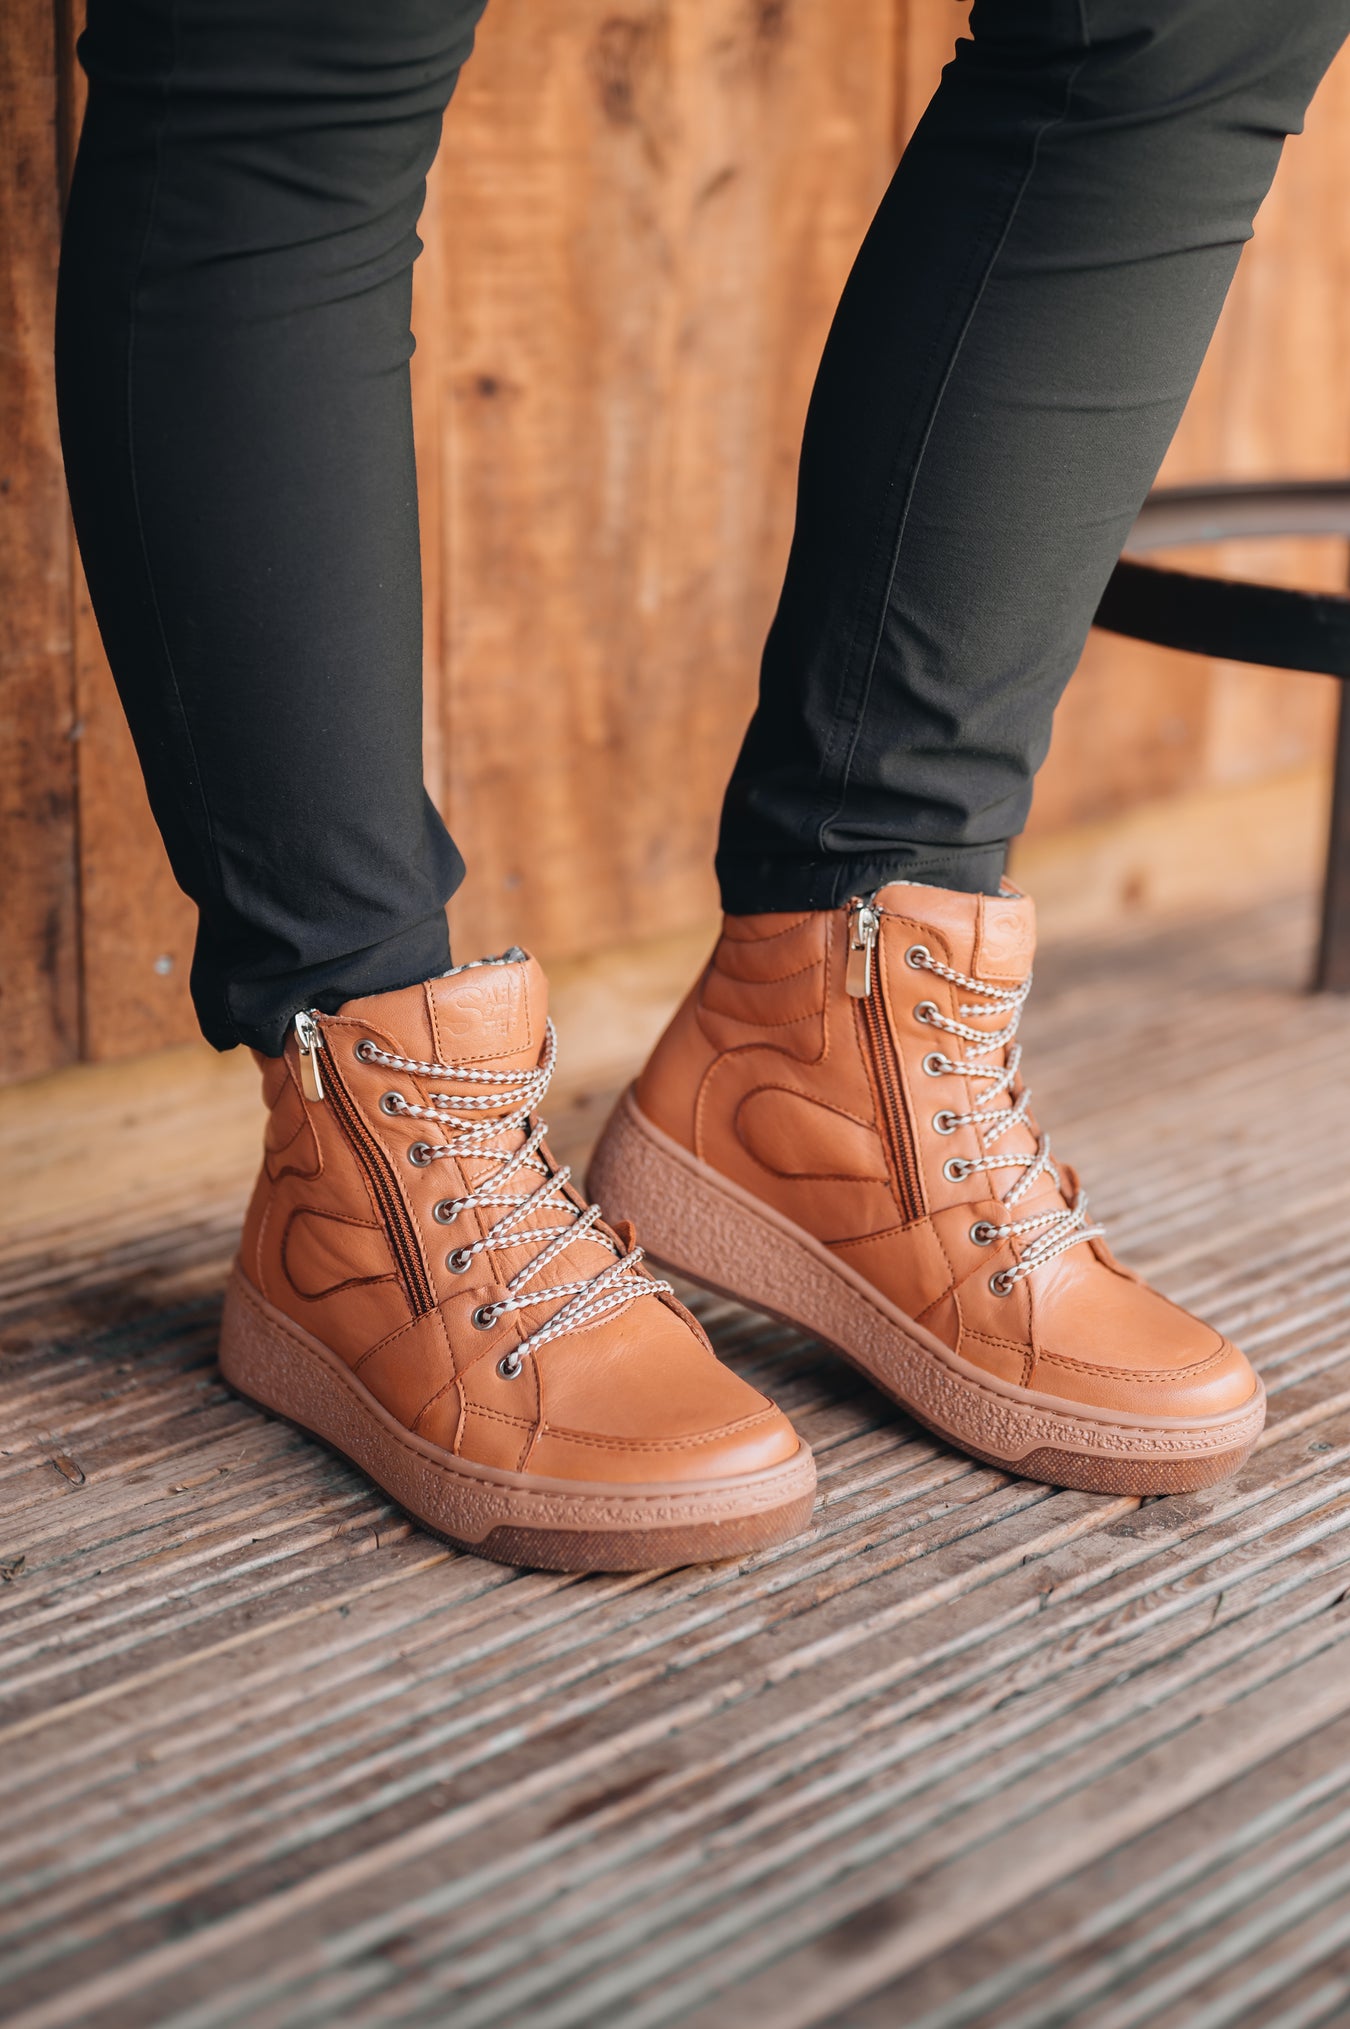 tan leather safestep boots